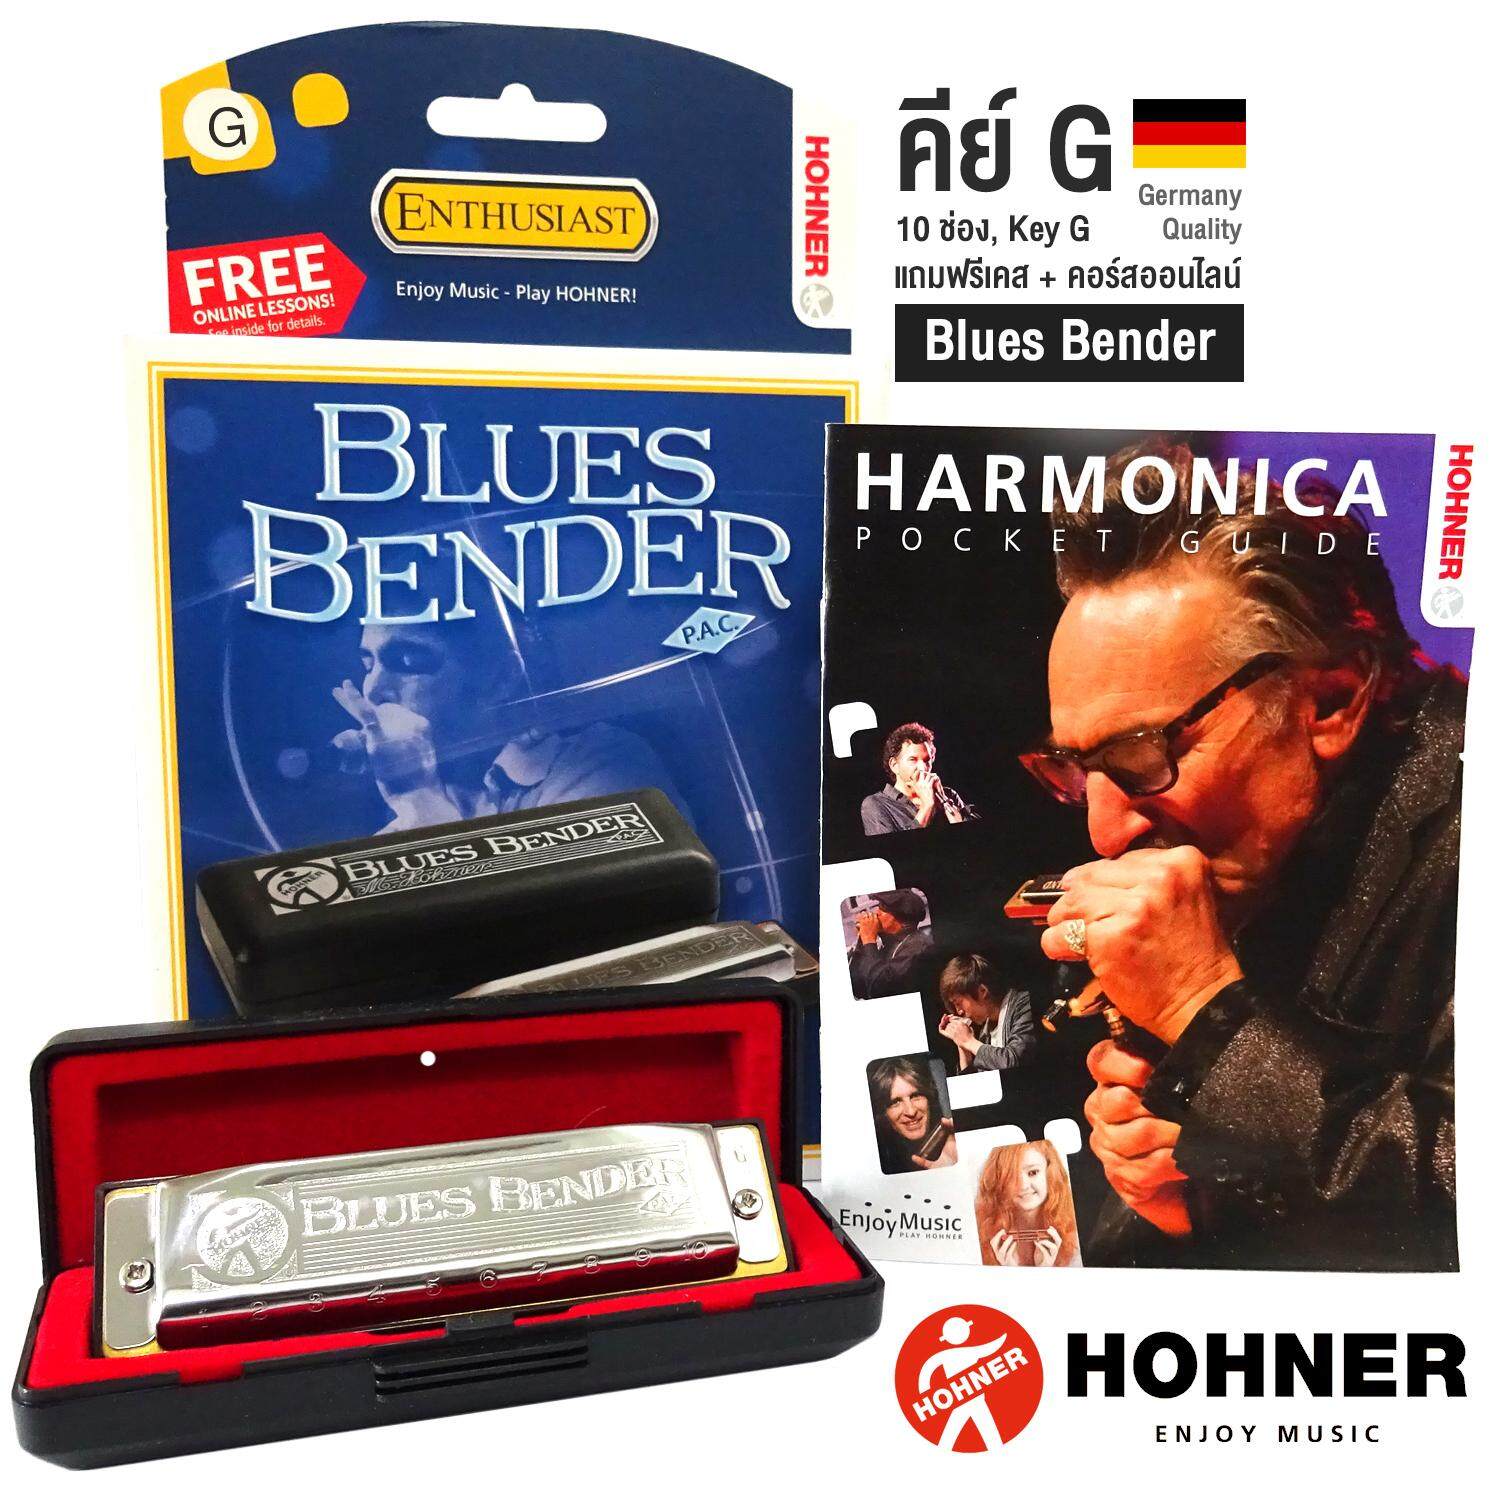 Hohner ฮาร์โมนิก้า รุ่น Blues Bender / 10 ช่อง คีย์ G (Harmonica Key G) + แถมฟรีเคส & คอร์สออนไลน์ ** Germany Quality **